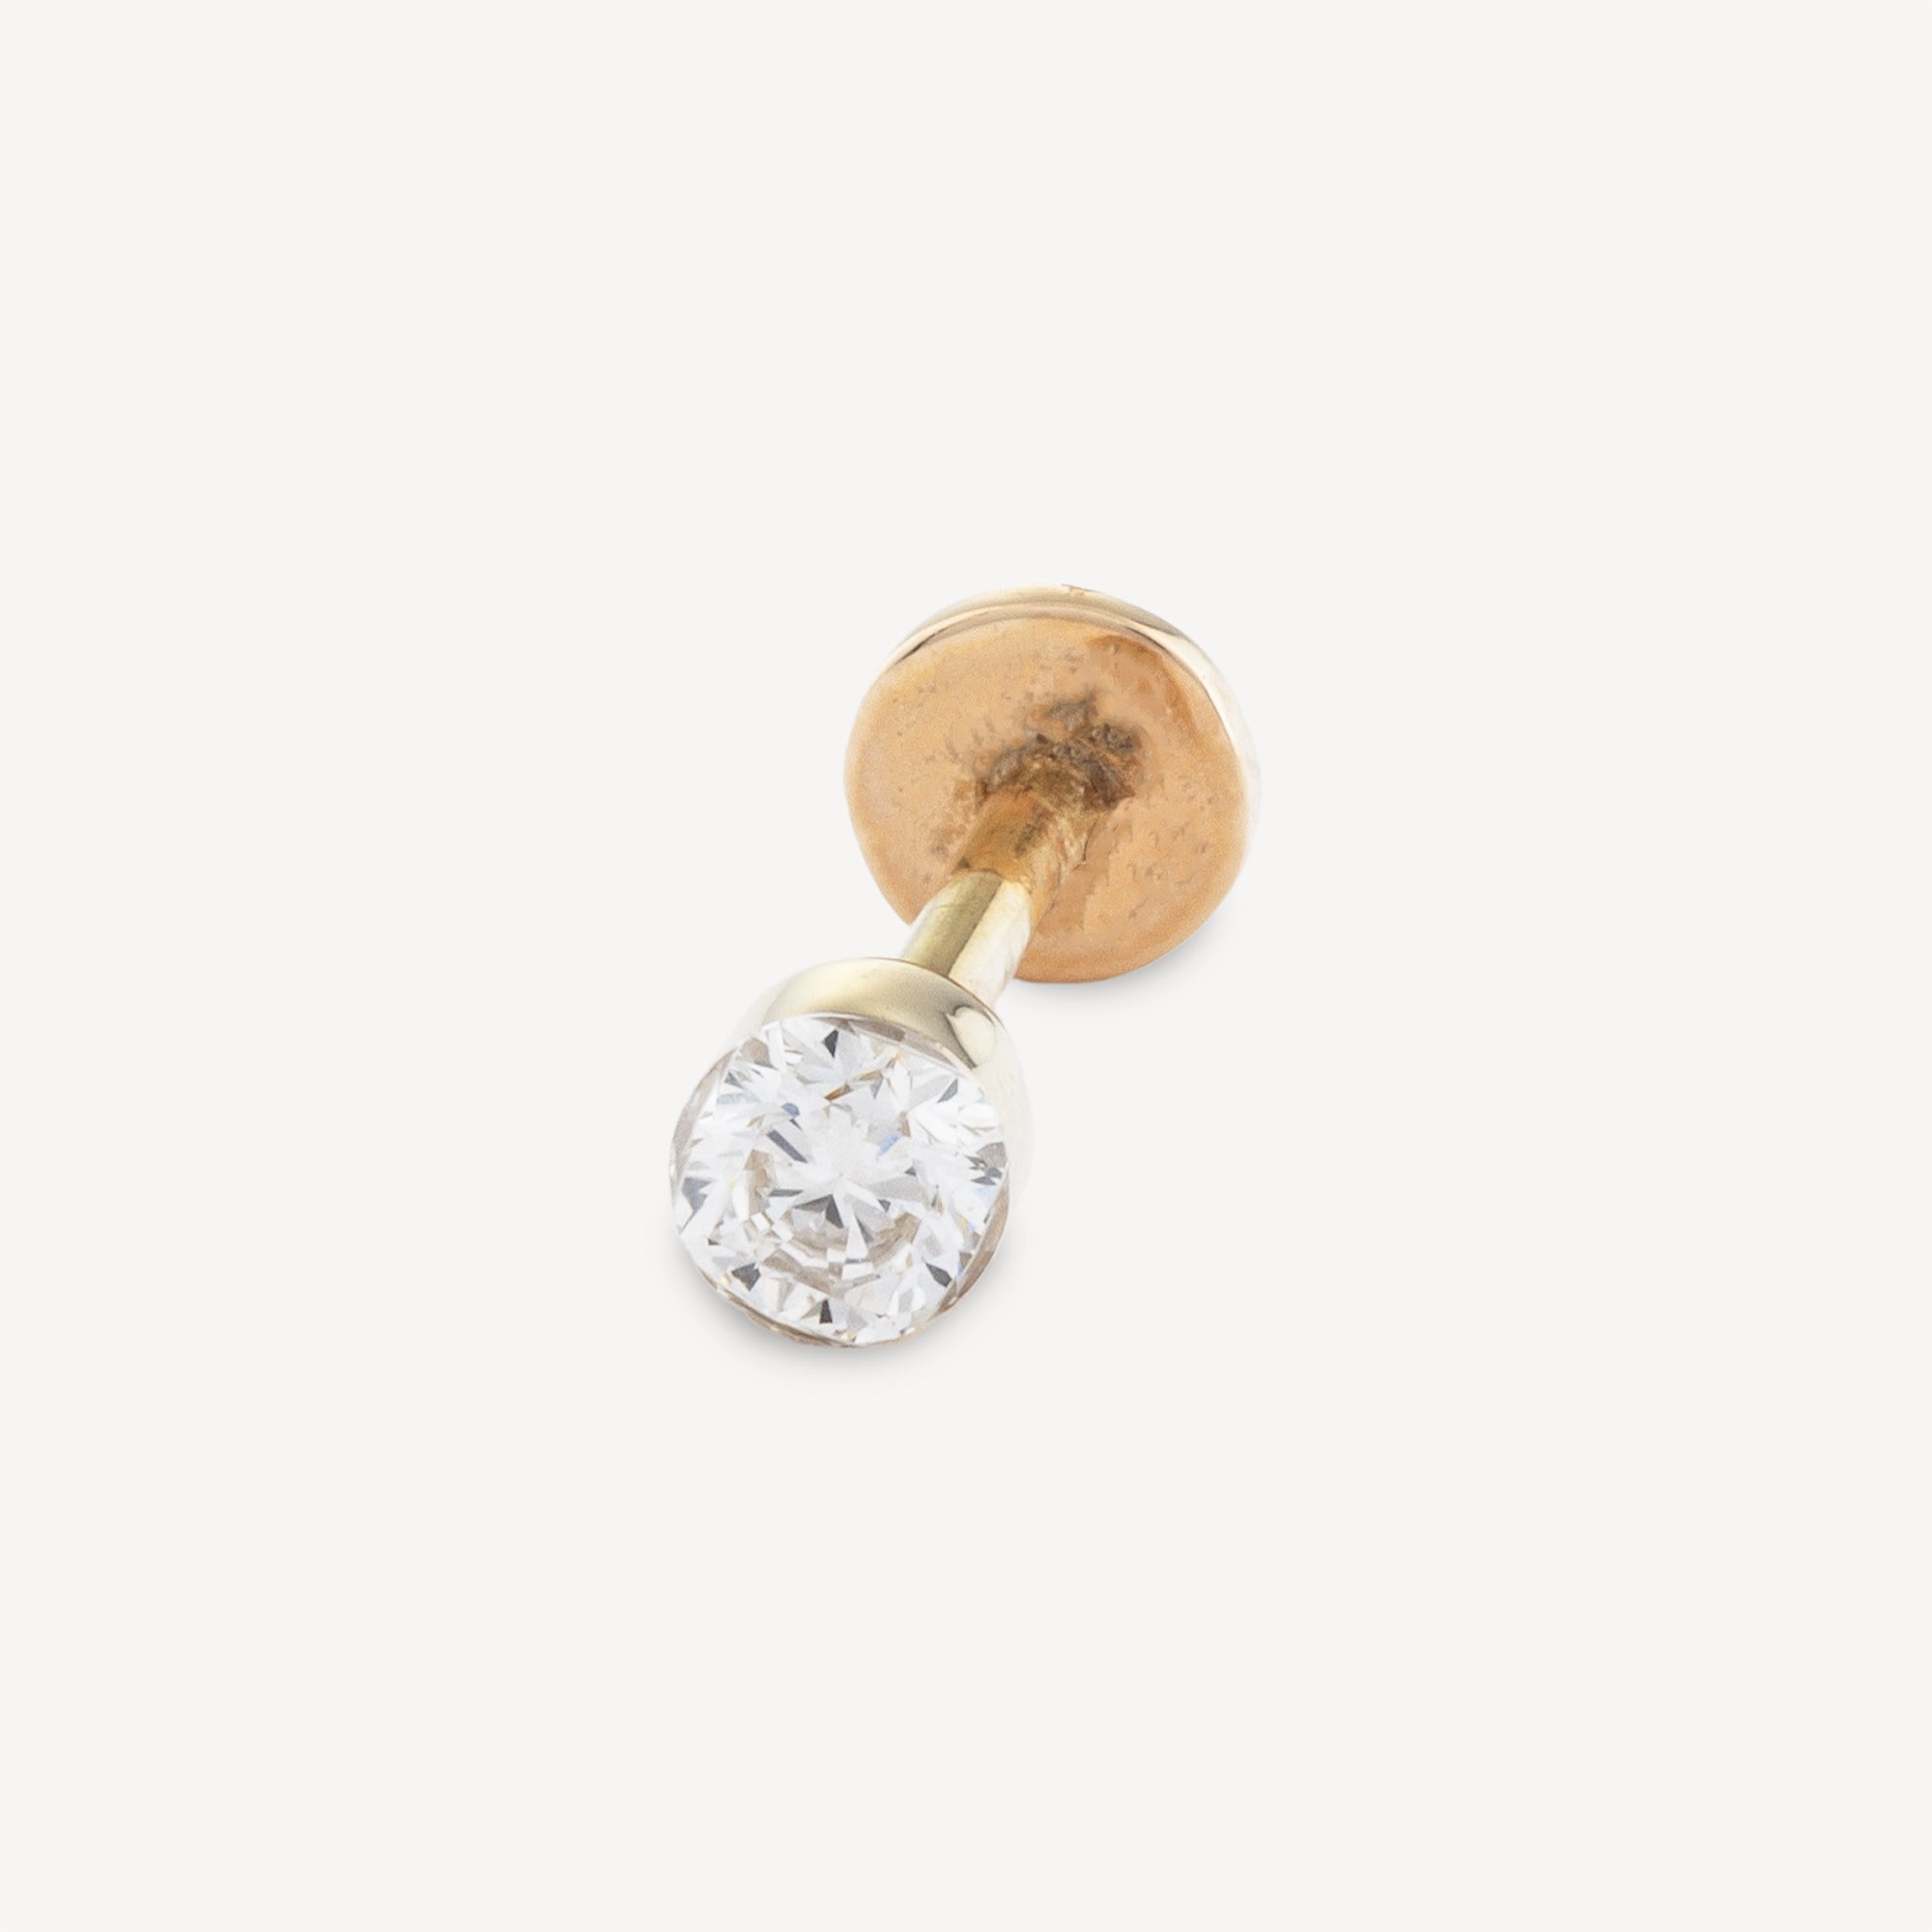 Piercing aus Puce, Roségold, Diamant, 3 mm, unsichtbare Fassung